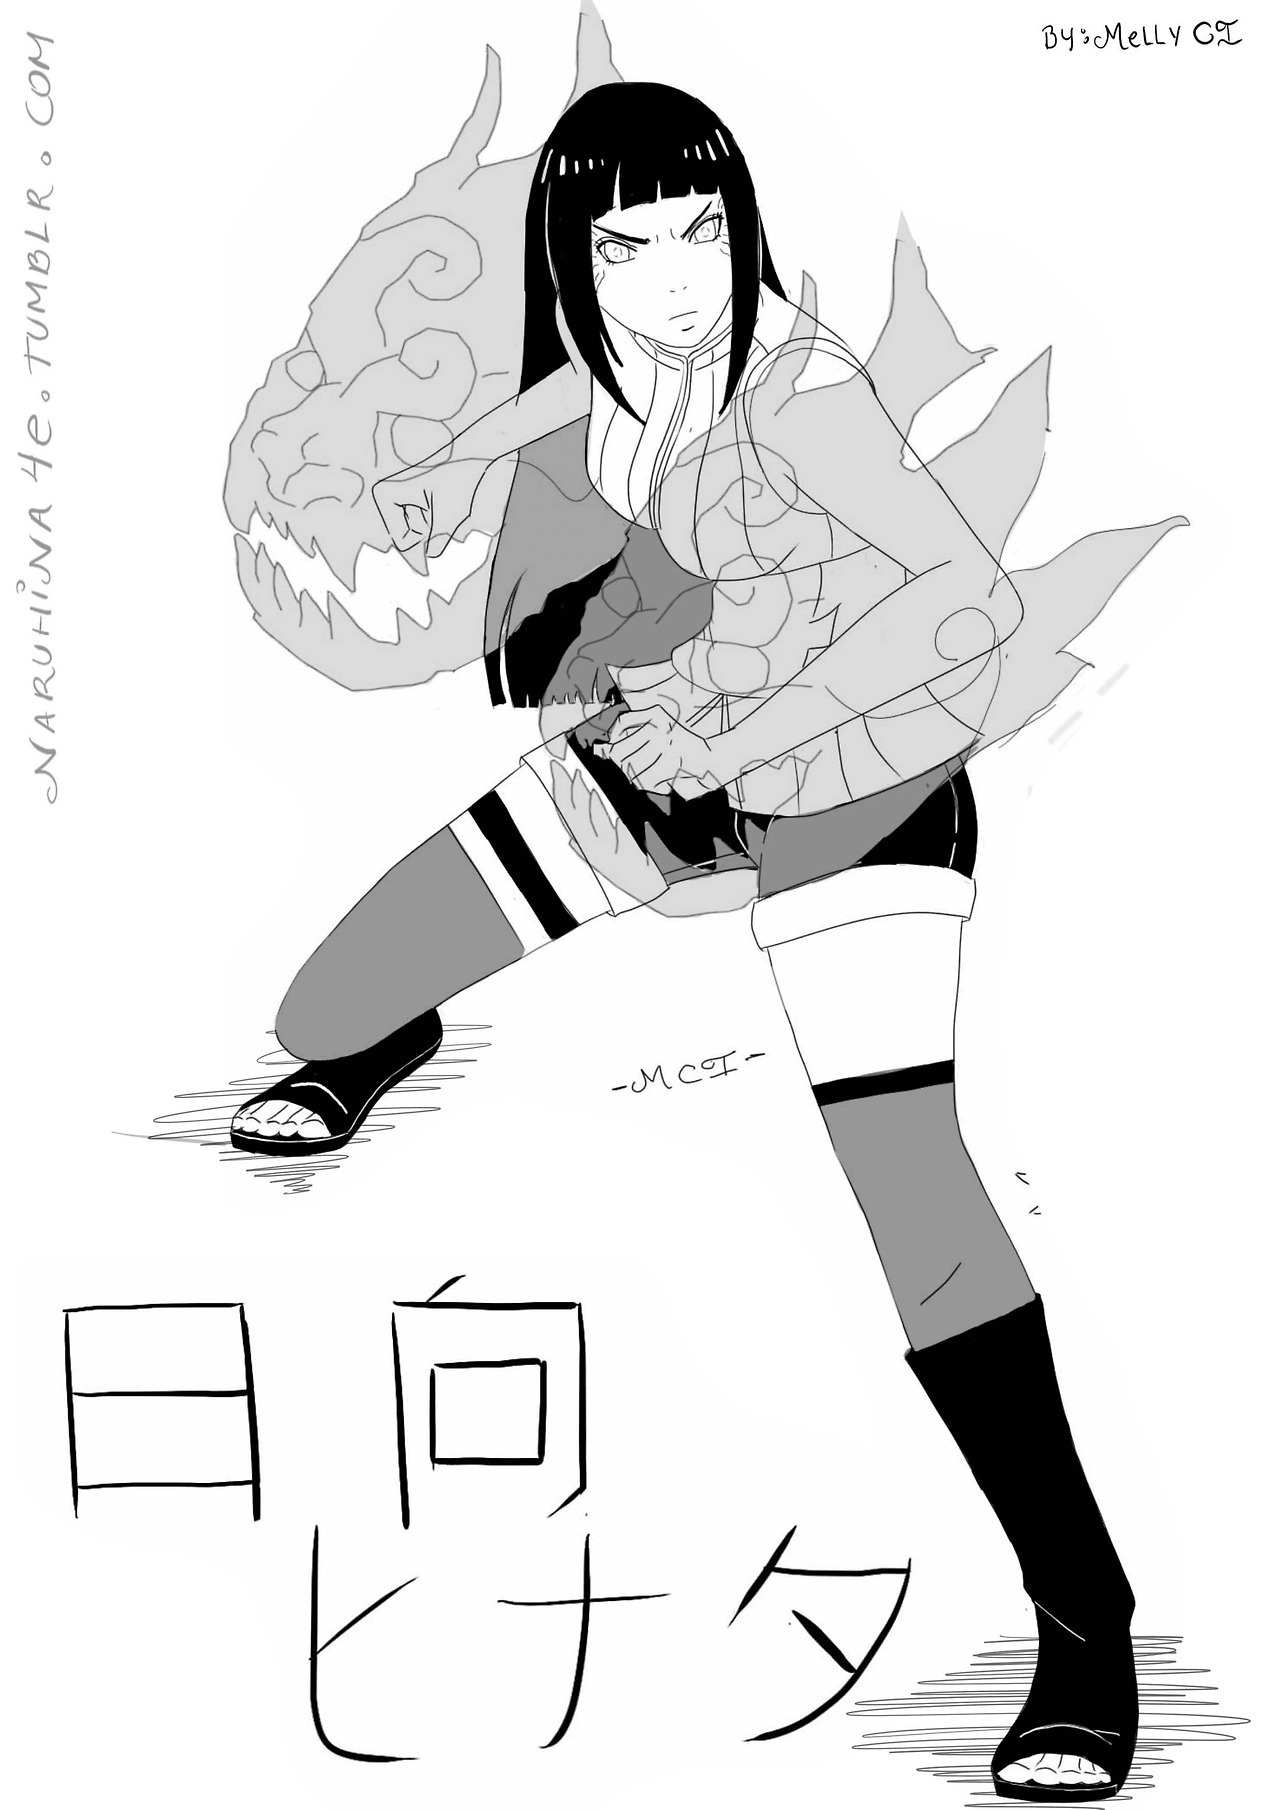 Hinata Naruto Dictionary Art Print Poster Picture Book Anime Manga Huuga 